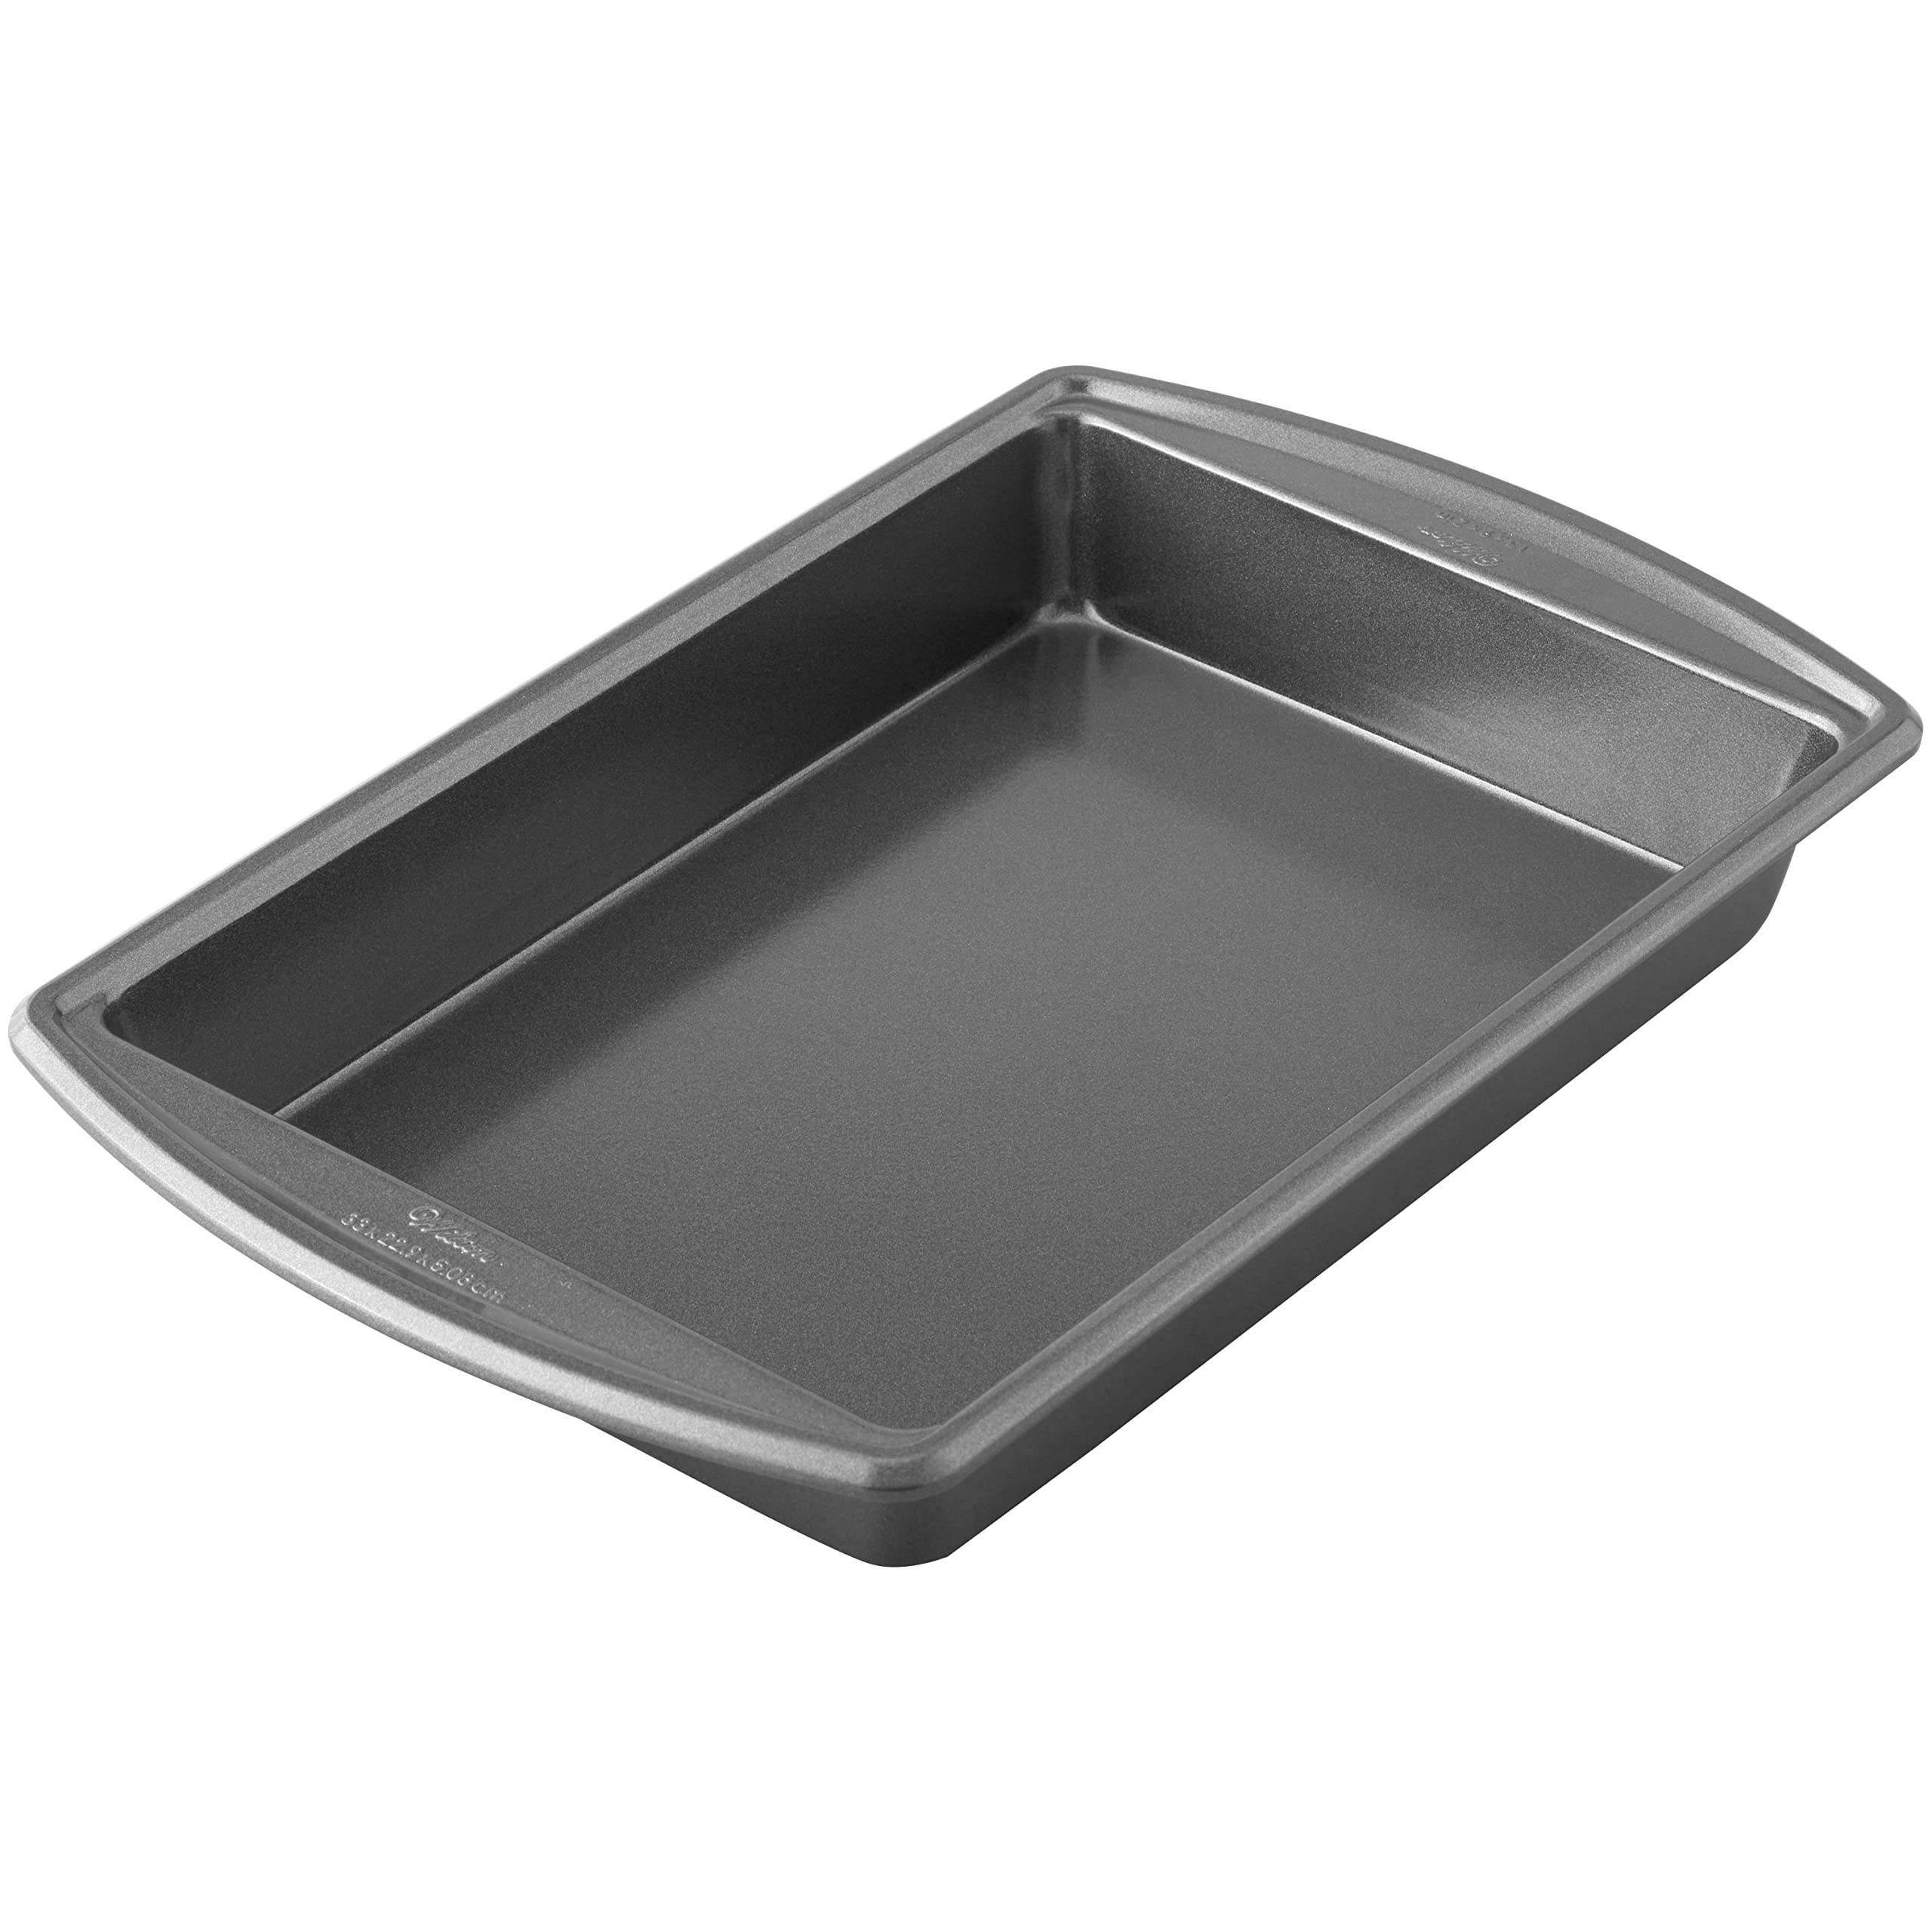 Wilton Advance Select Premium Nonstick Oblong Baking Pan, 9 x 13-Inch, Steel, Silver